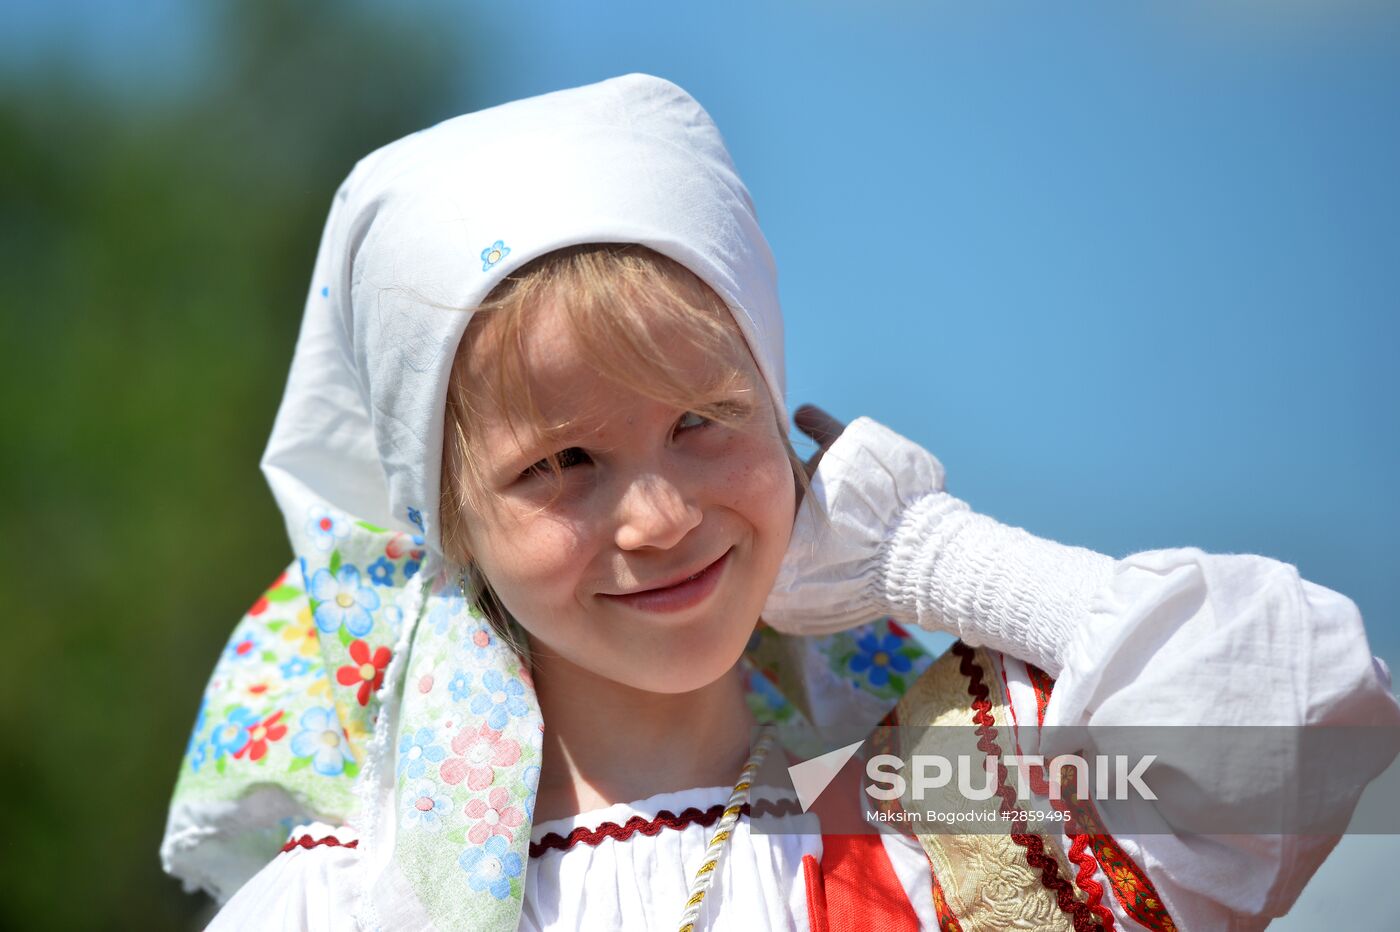 Festival of Russian Folklore "Karavon" in Tatarstan